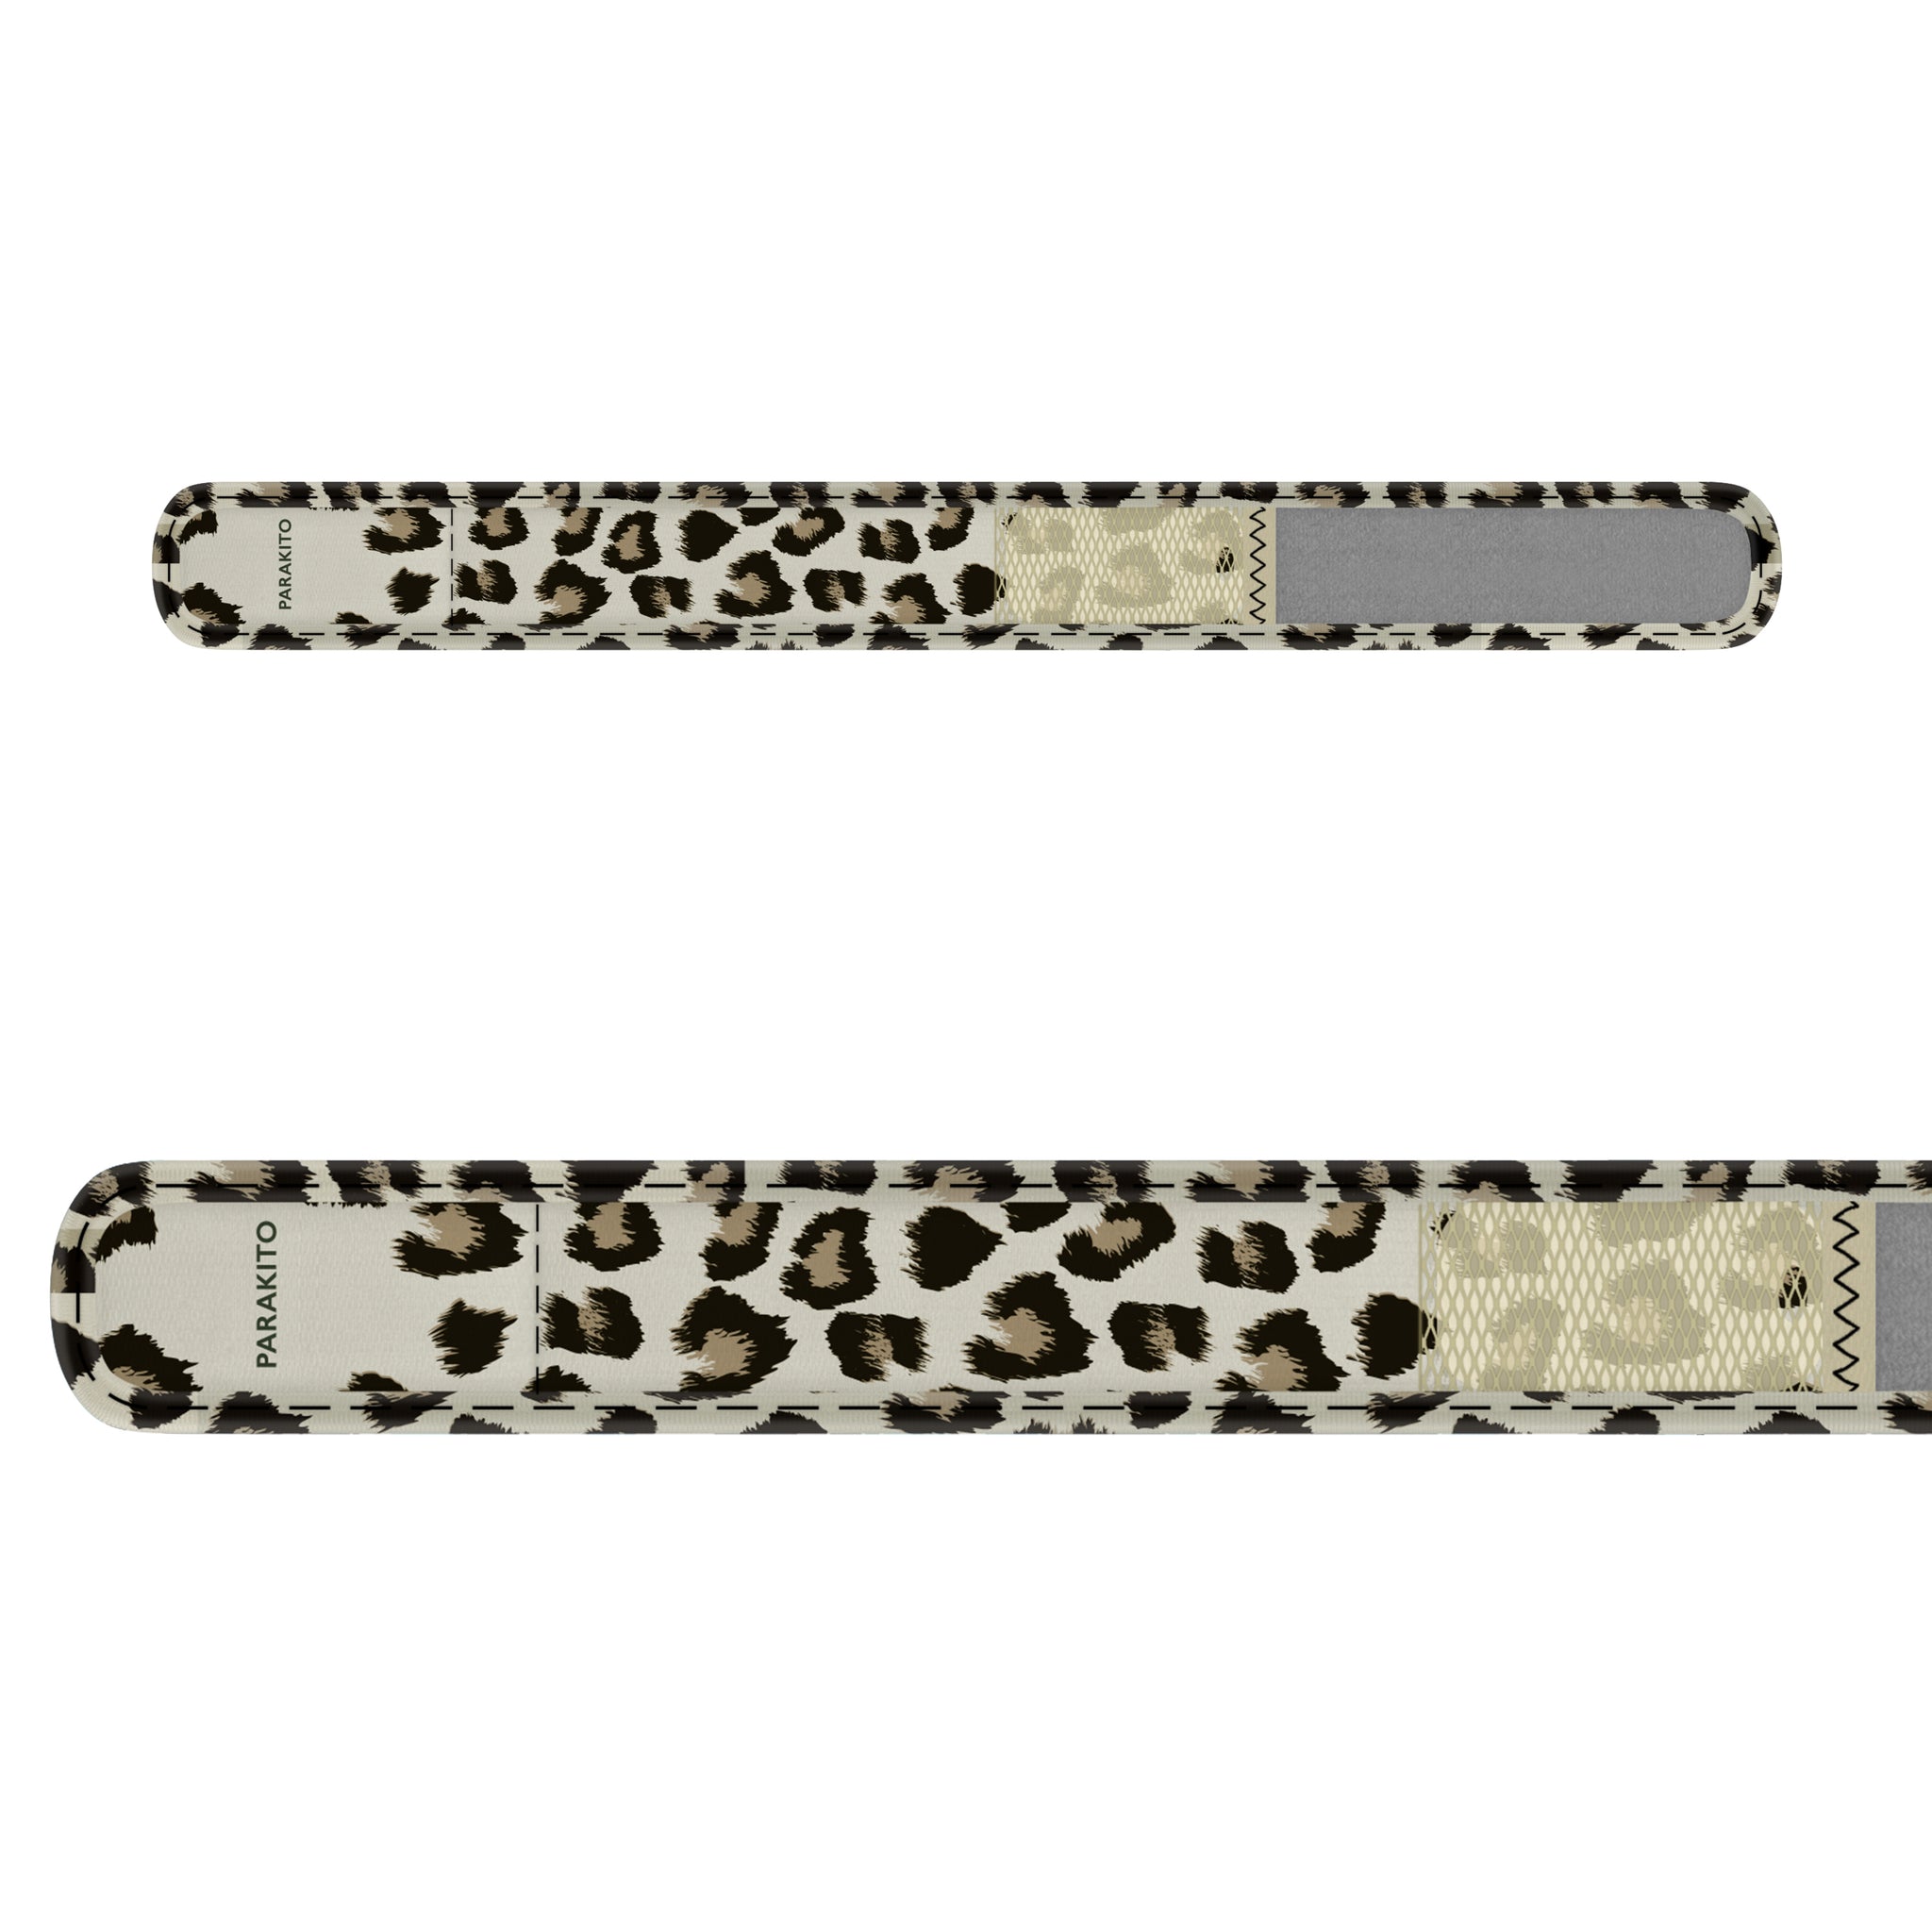 Mosquito Repellent Wristband - Leopard